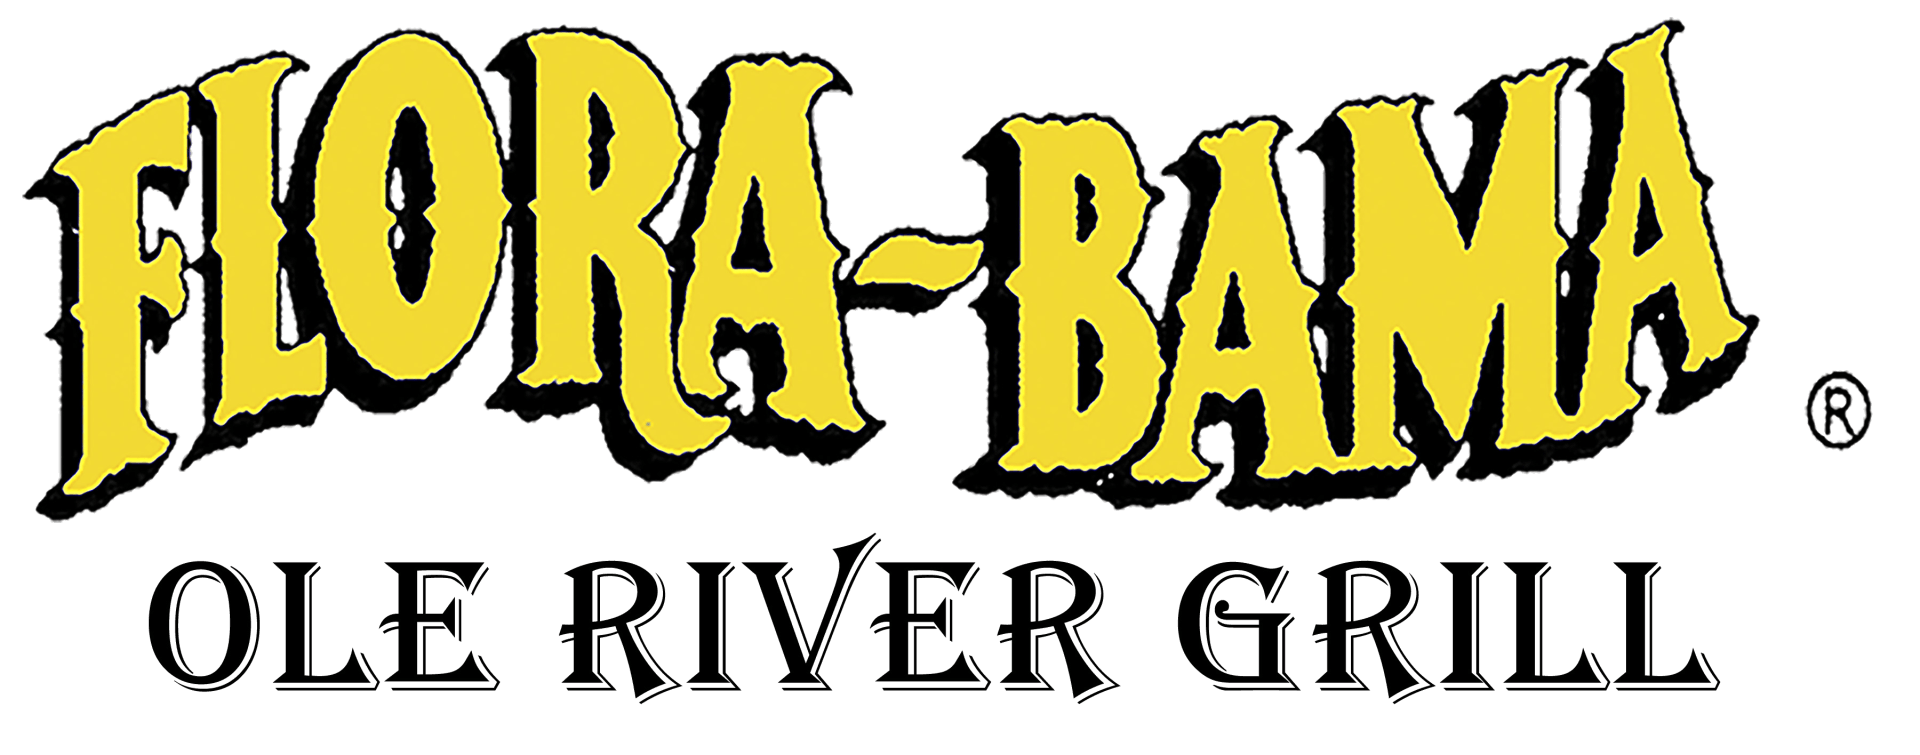 flora bama yacht club vs ole river grill